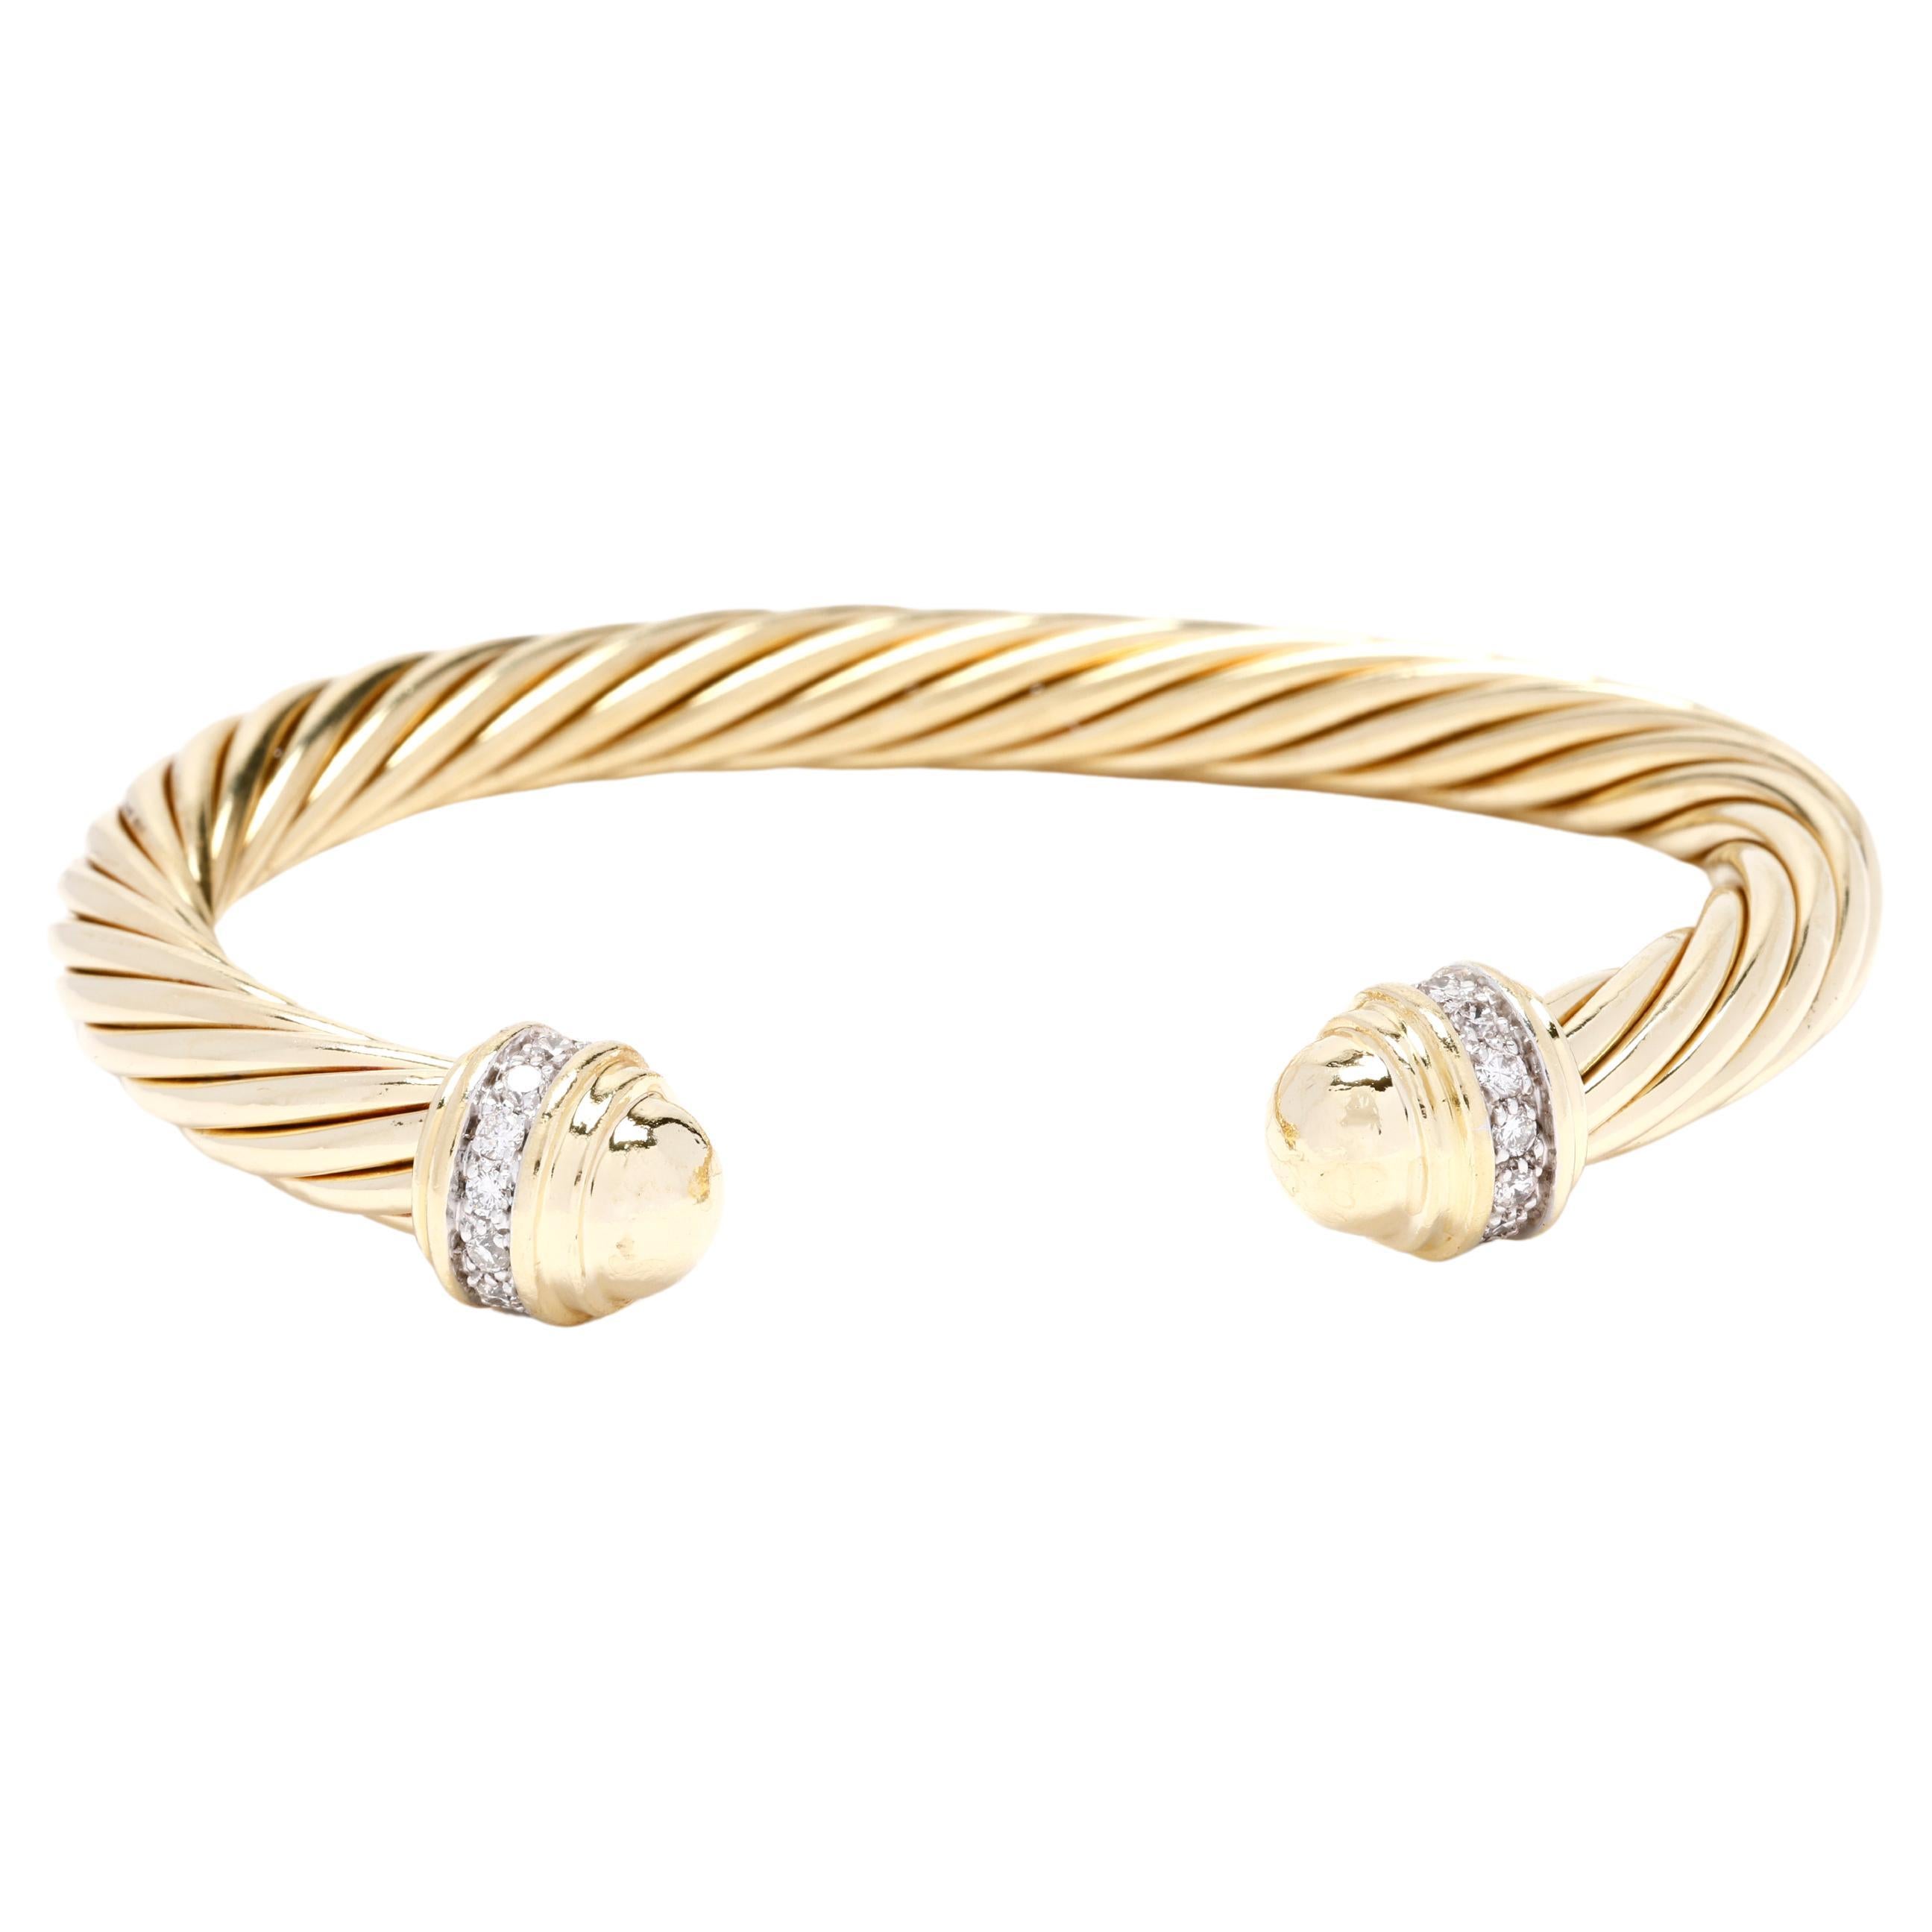 David Yurman .40ctw Diamond and Gold Cuff Bracelet, 18k Yellow Gold, Twisted